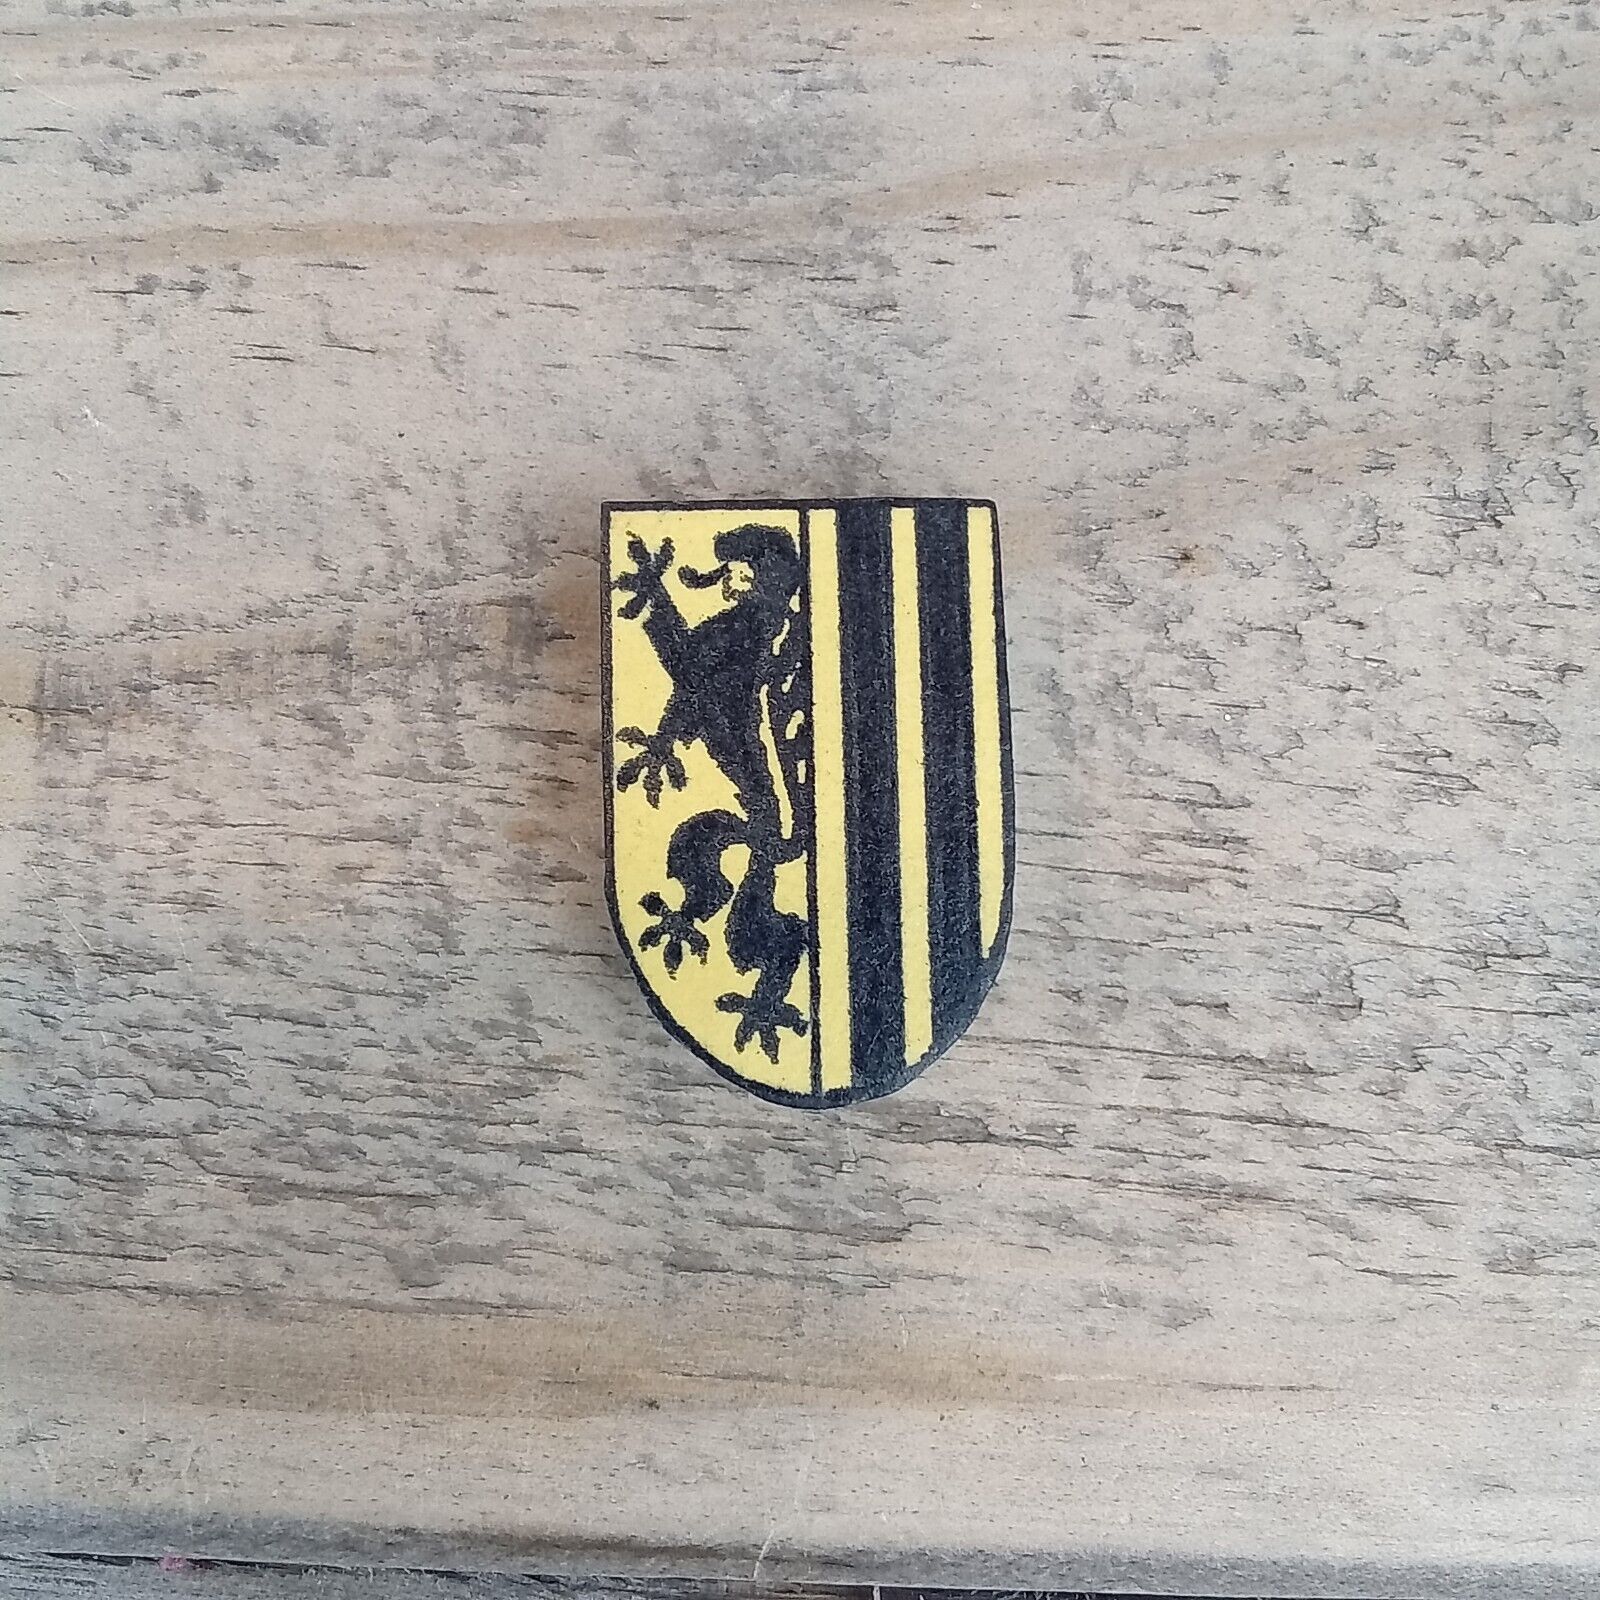 Germany City of Dresden Coat of Arms Heraldic Lion Motif Pin Badge Plastic